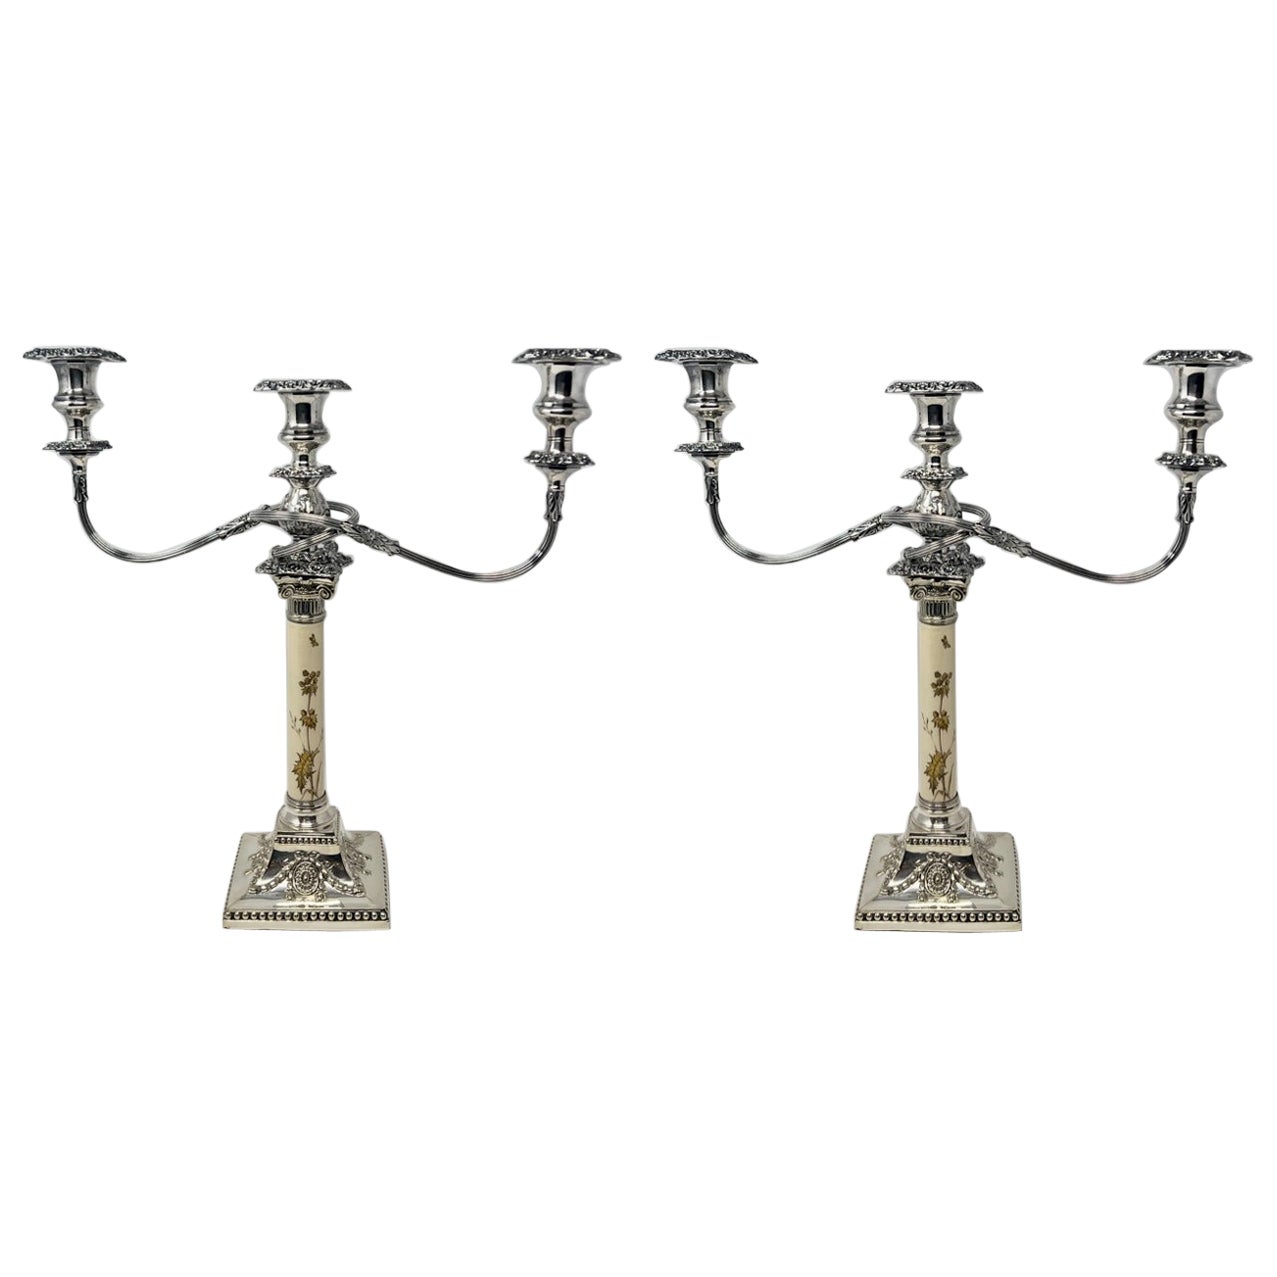 Pair Estate English Aesthetic Movement Silver-Plated Candlesticks Circa 1950-60.